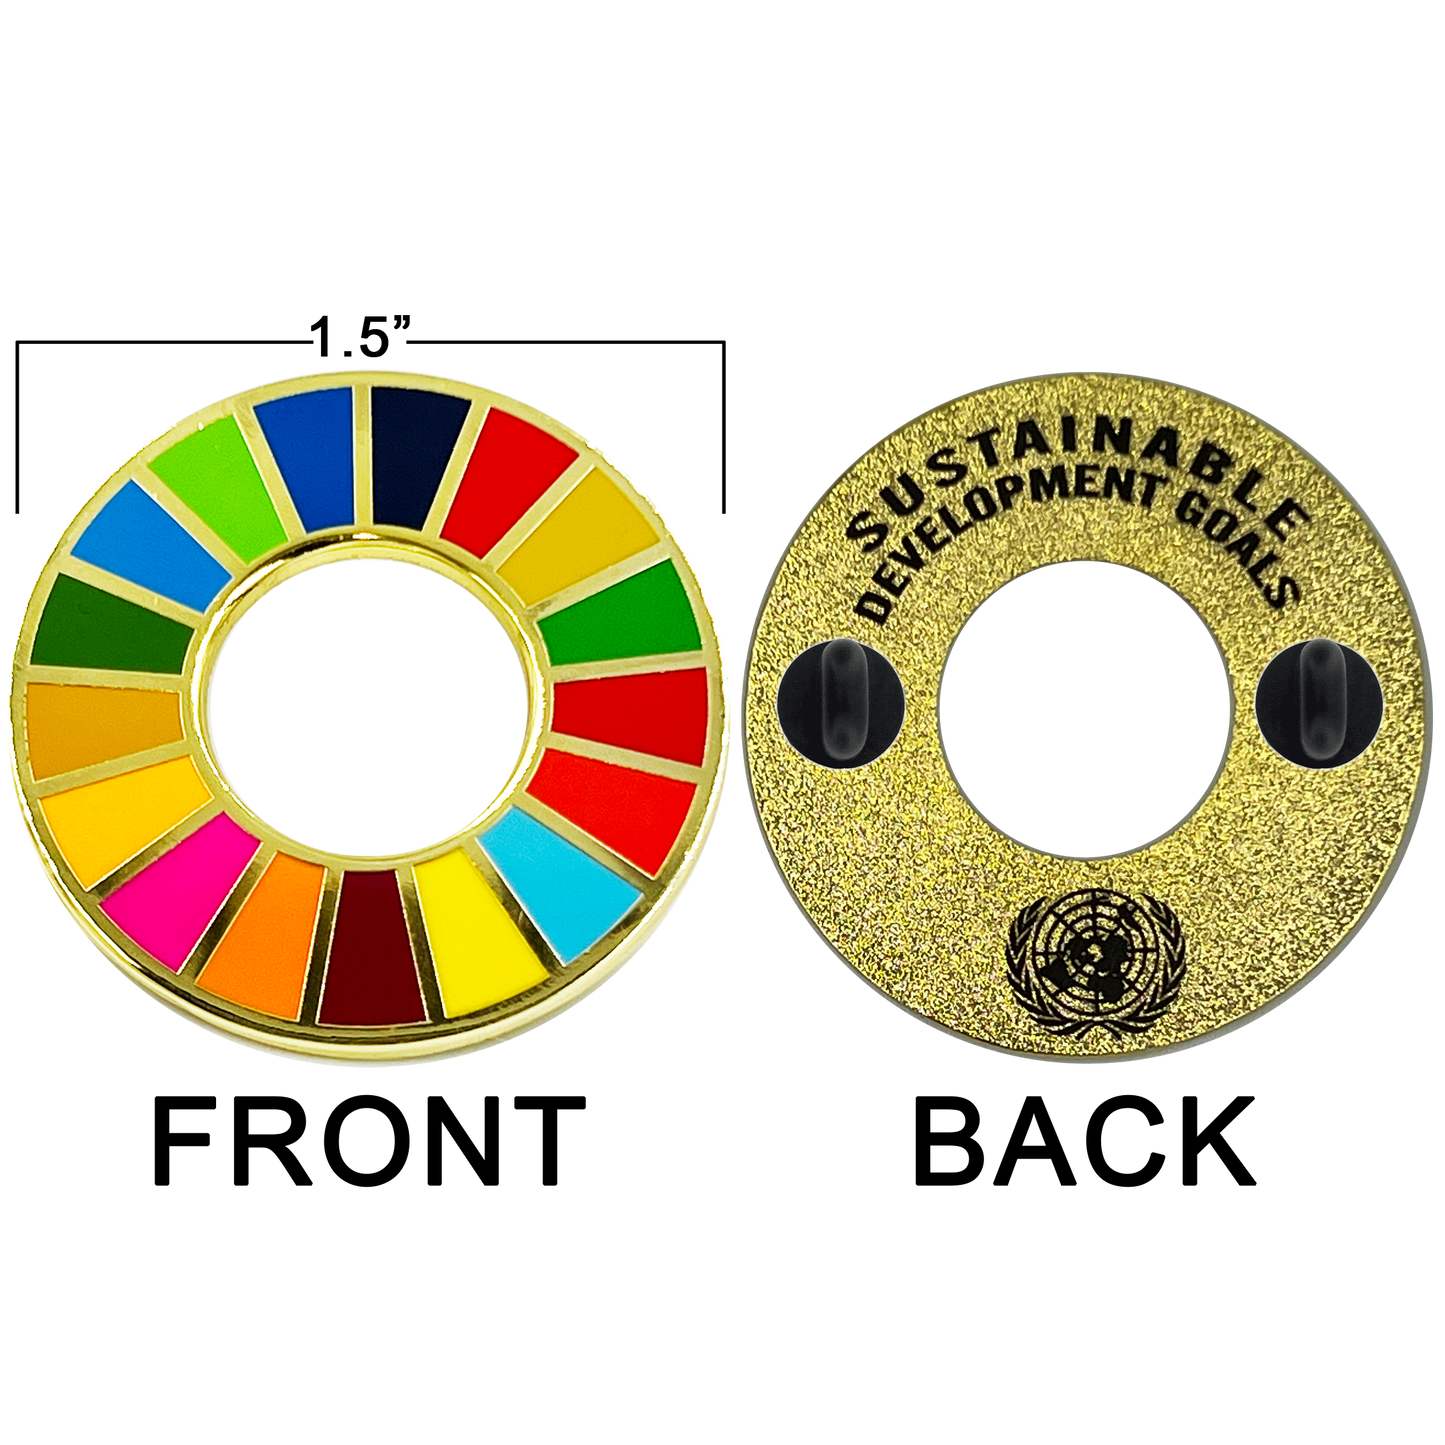 GL3-004 UN 17 Sustainable Development Goals United Nation not NATO Global Goals Lapel Pin Blueprint for Peace